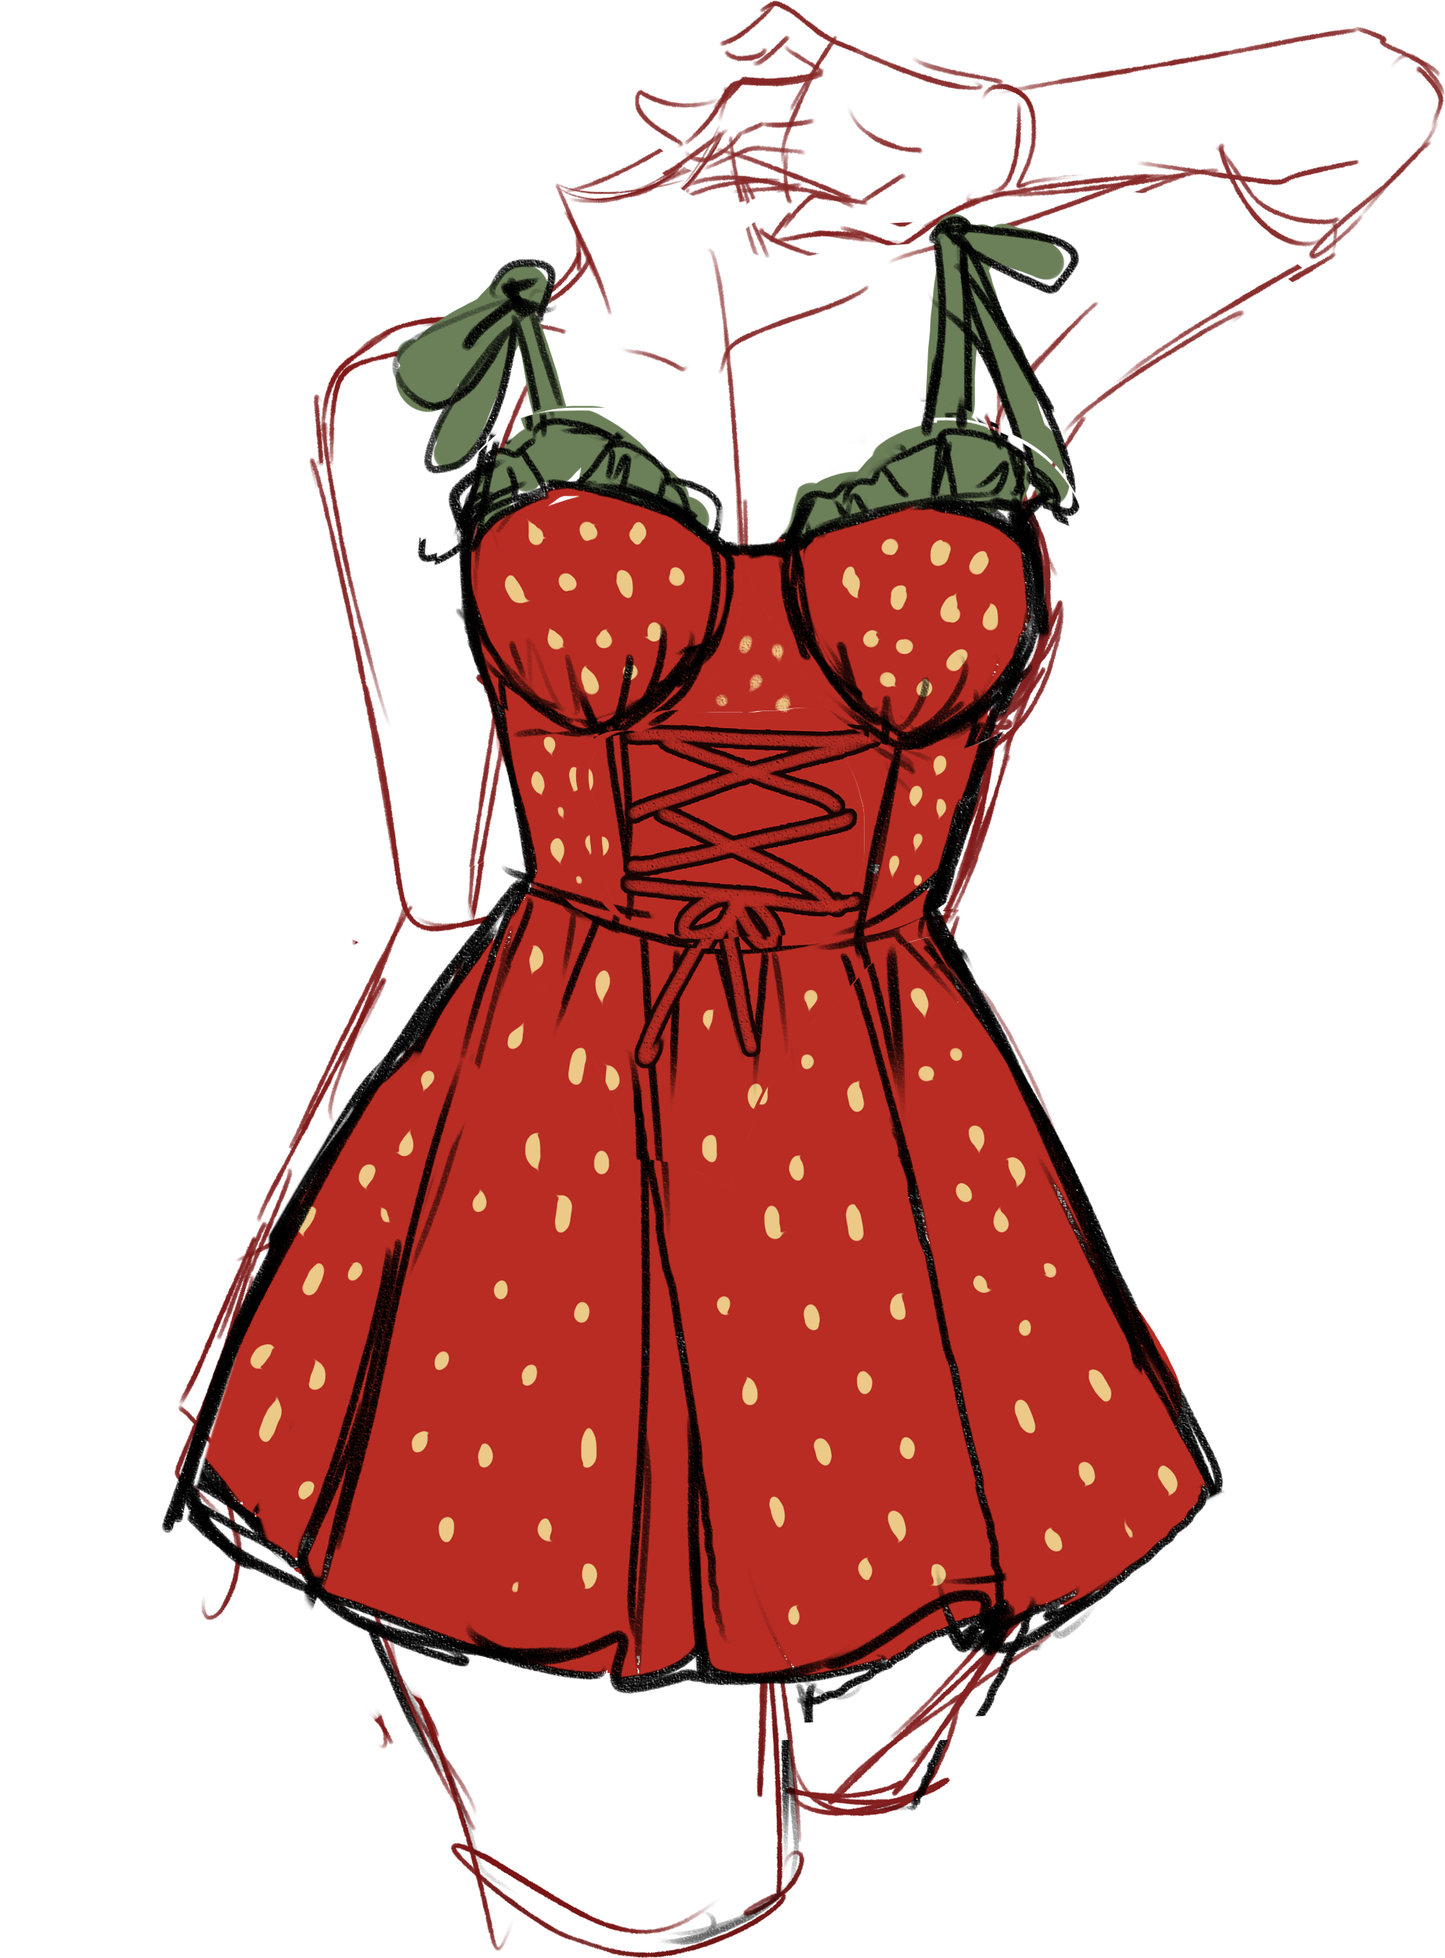 [INTEREST CHECK] Strawberry Swim Dress